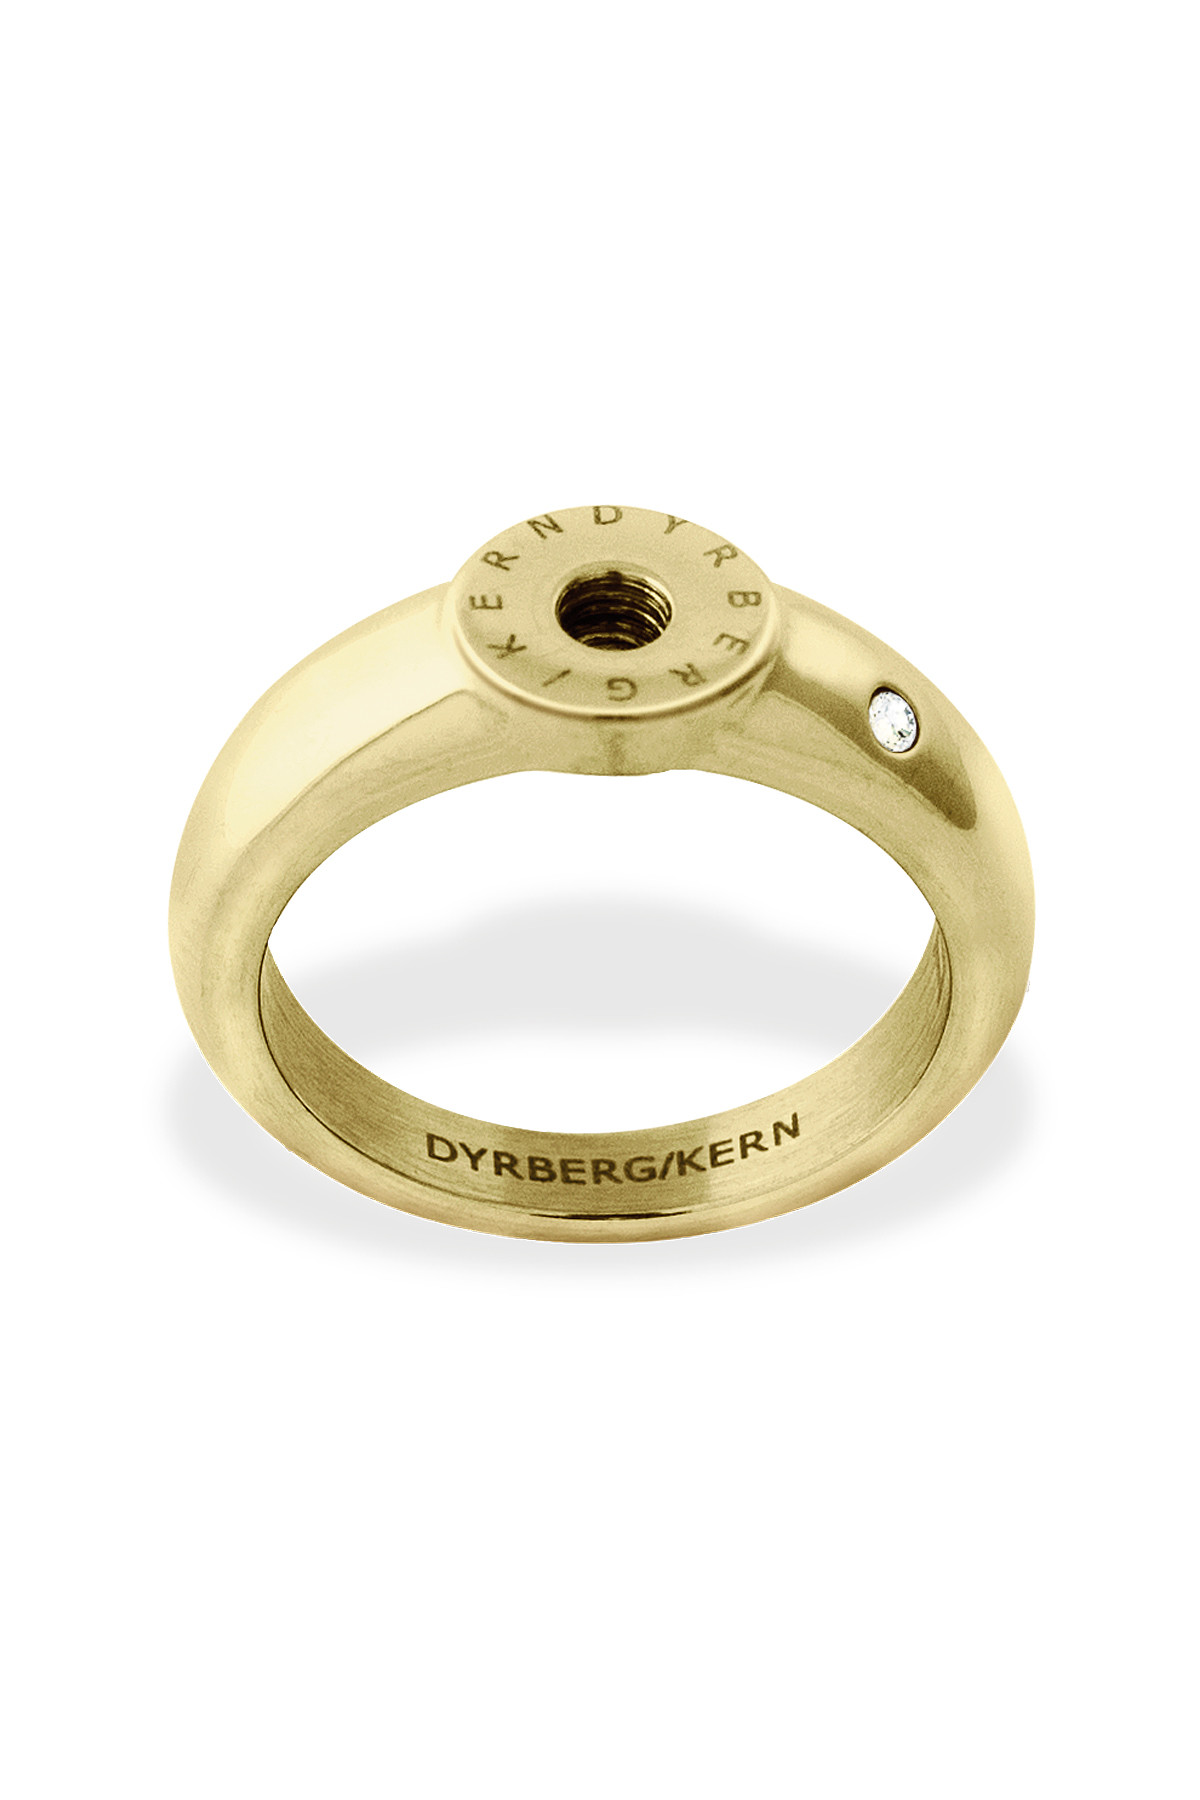 DYRBERG/KERN RING 3 RING 343082 (Gold, Crystal, IIII/60)